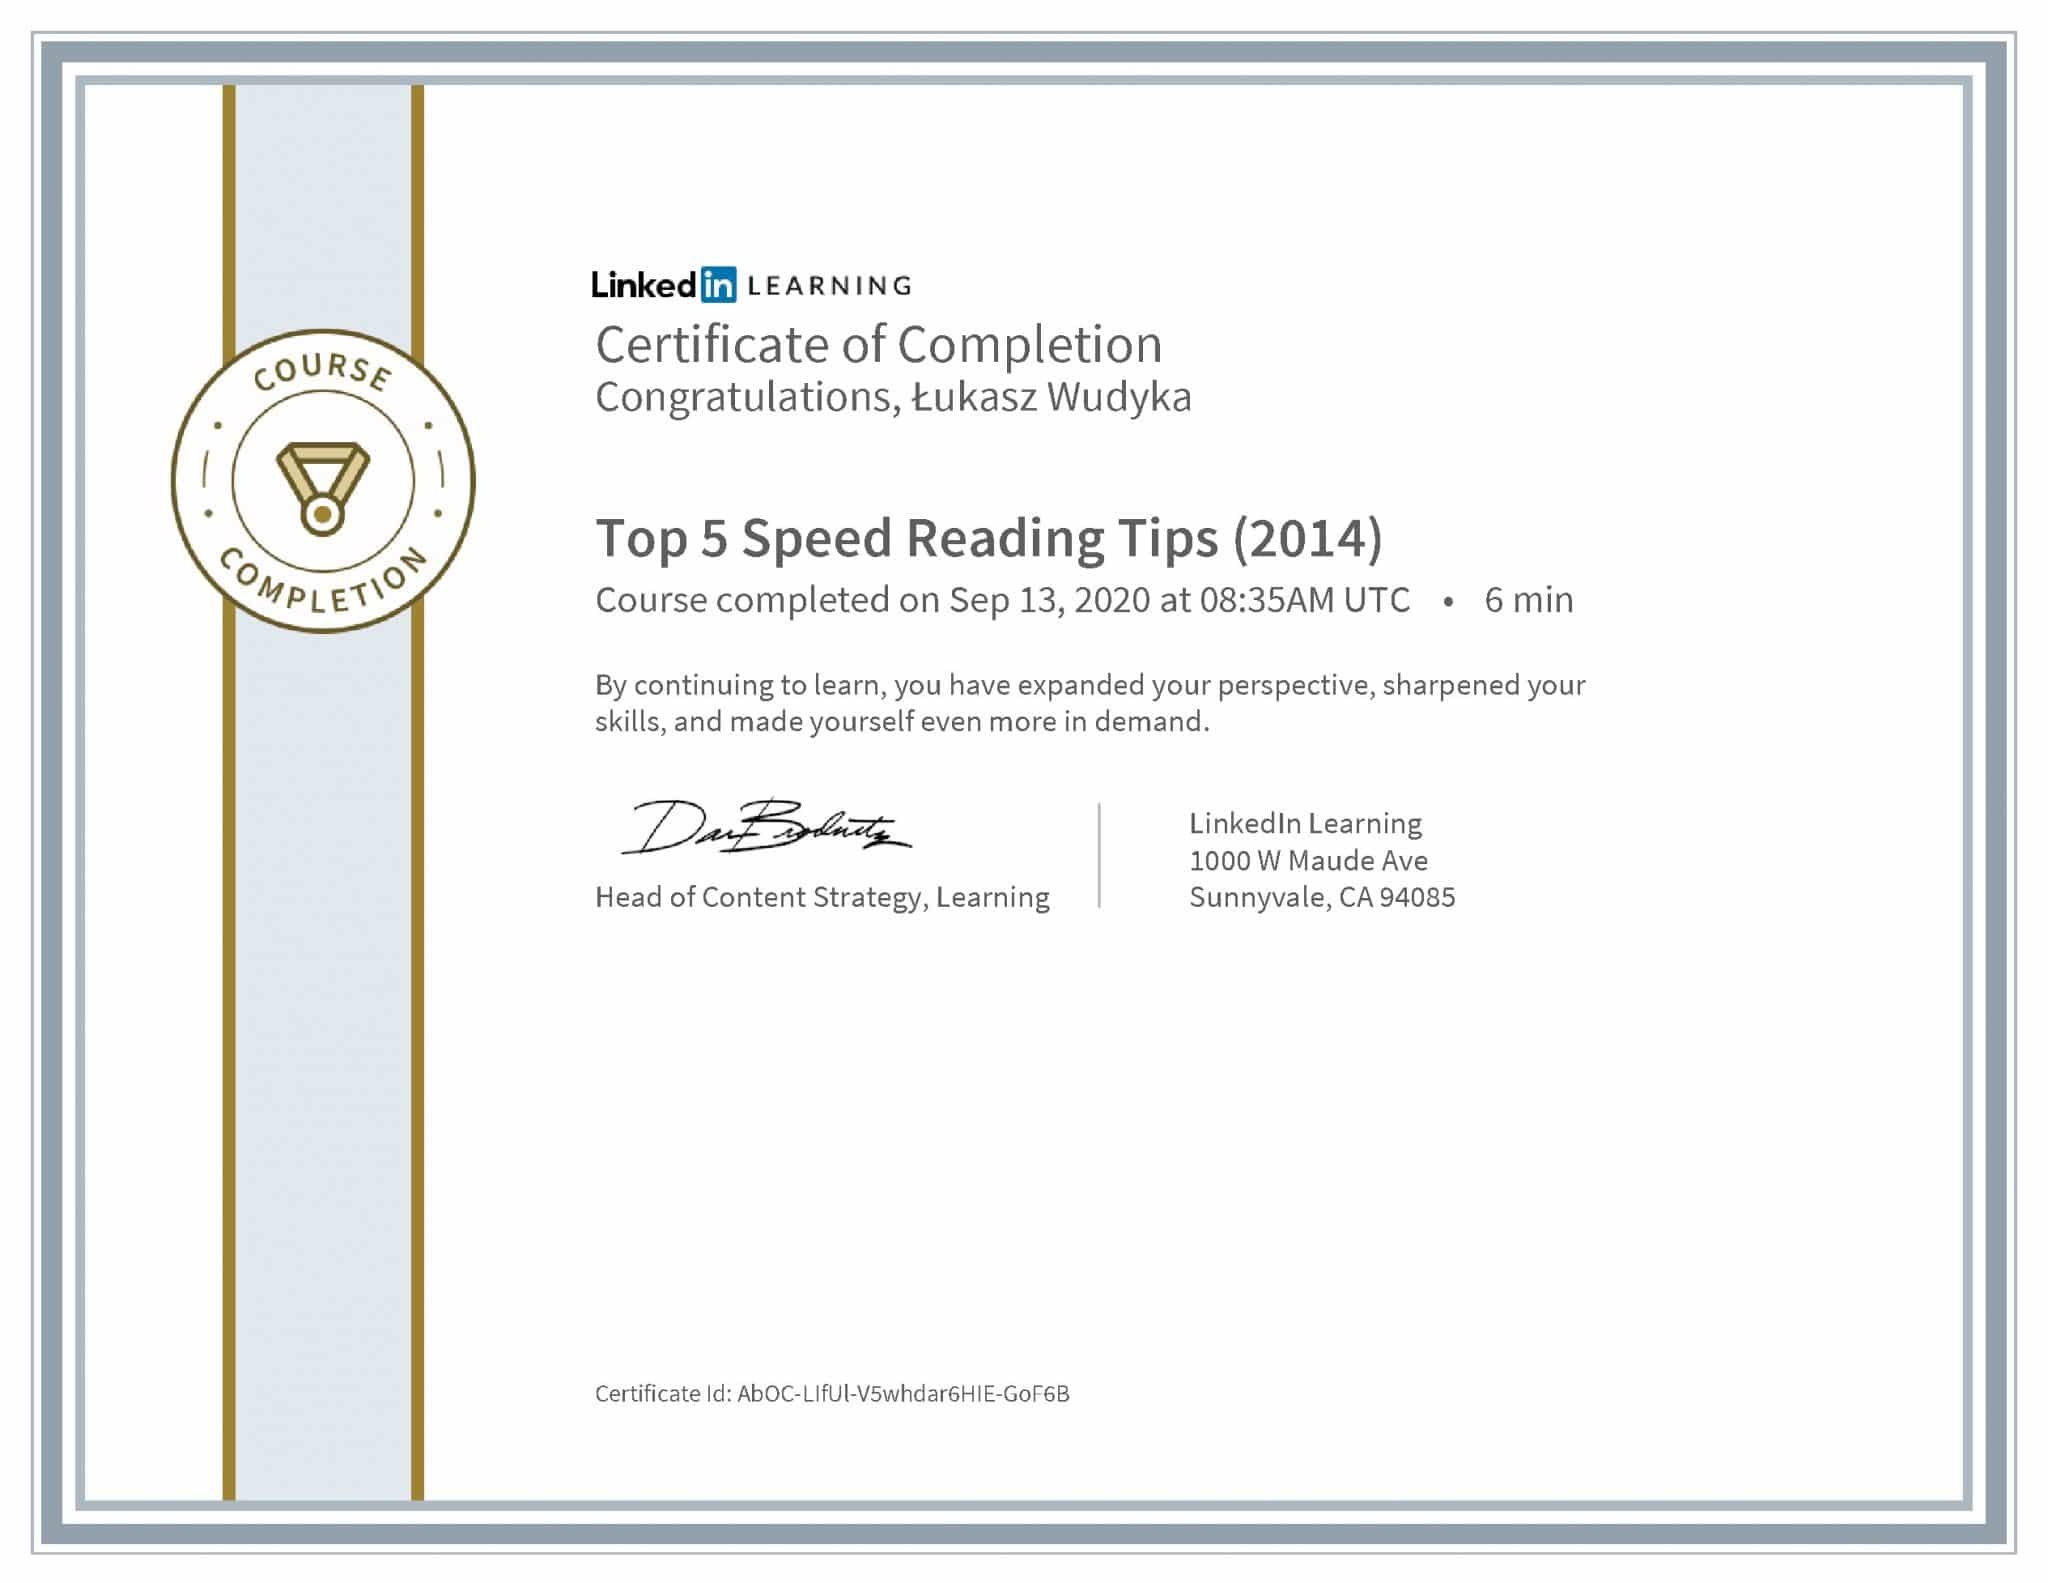 Łukasz Wudyka certyfikat LinkedIn Top 5 Speed Reading Tips (2014)